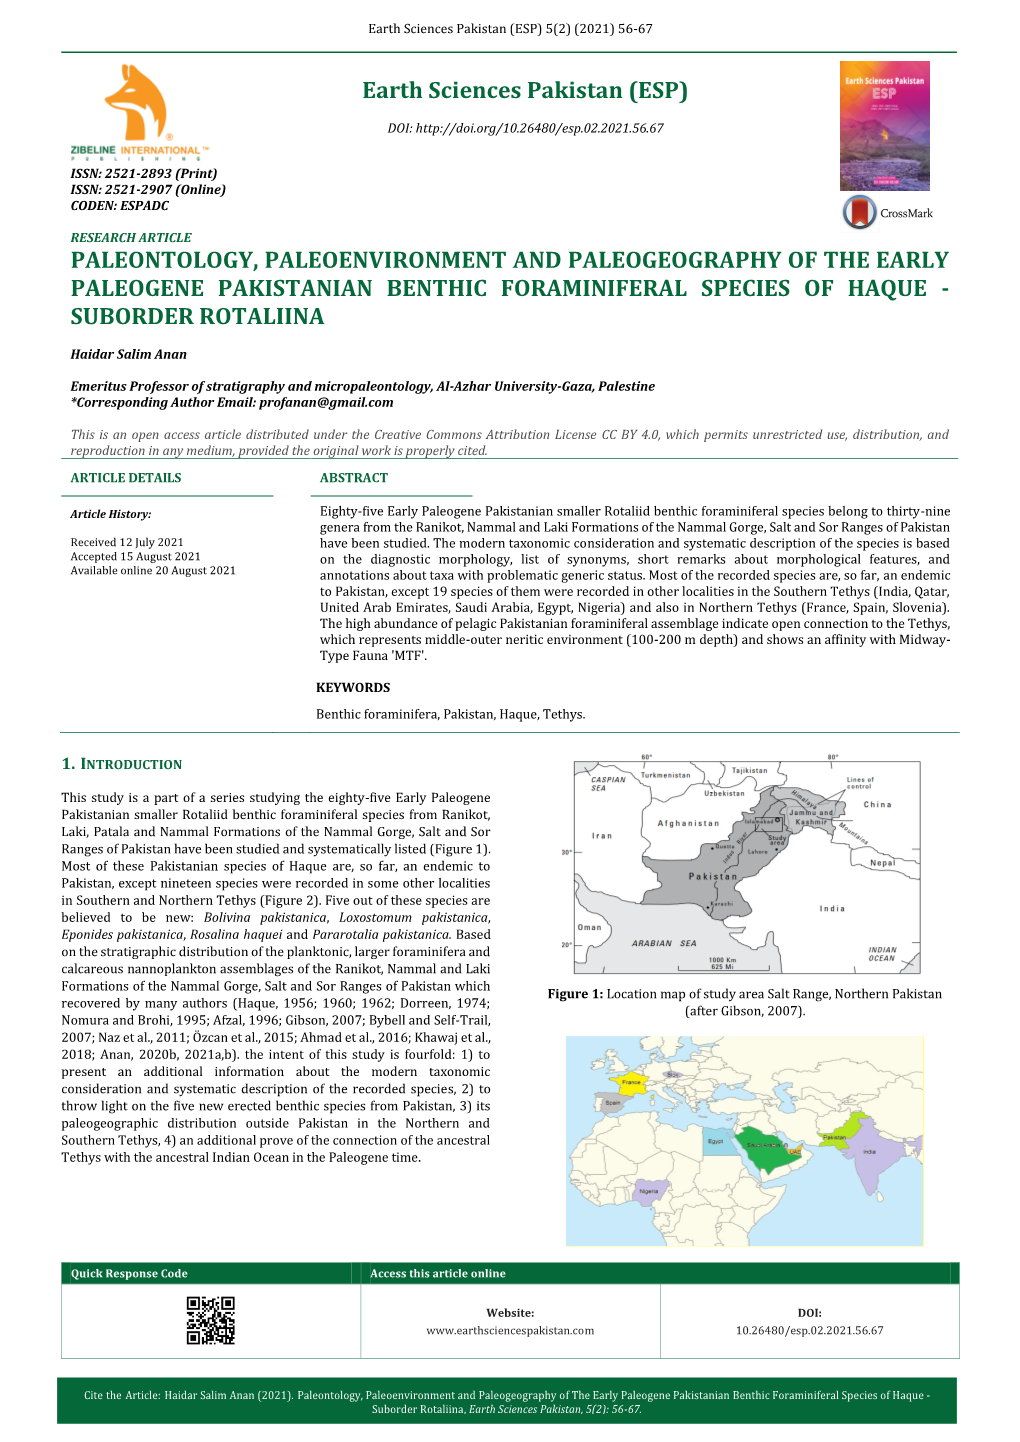 Paleontology, Paleoenvironment and Paleogeography of the Early Paleogene Pakistanian Benthic Foraminiferal Species of Haque - Suborder Rotaliina